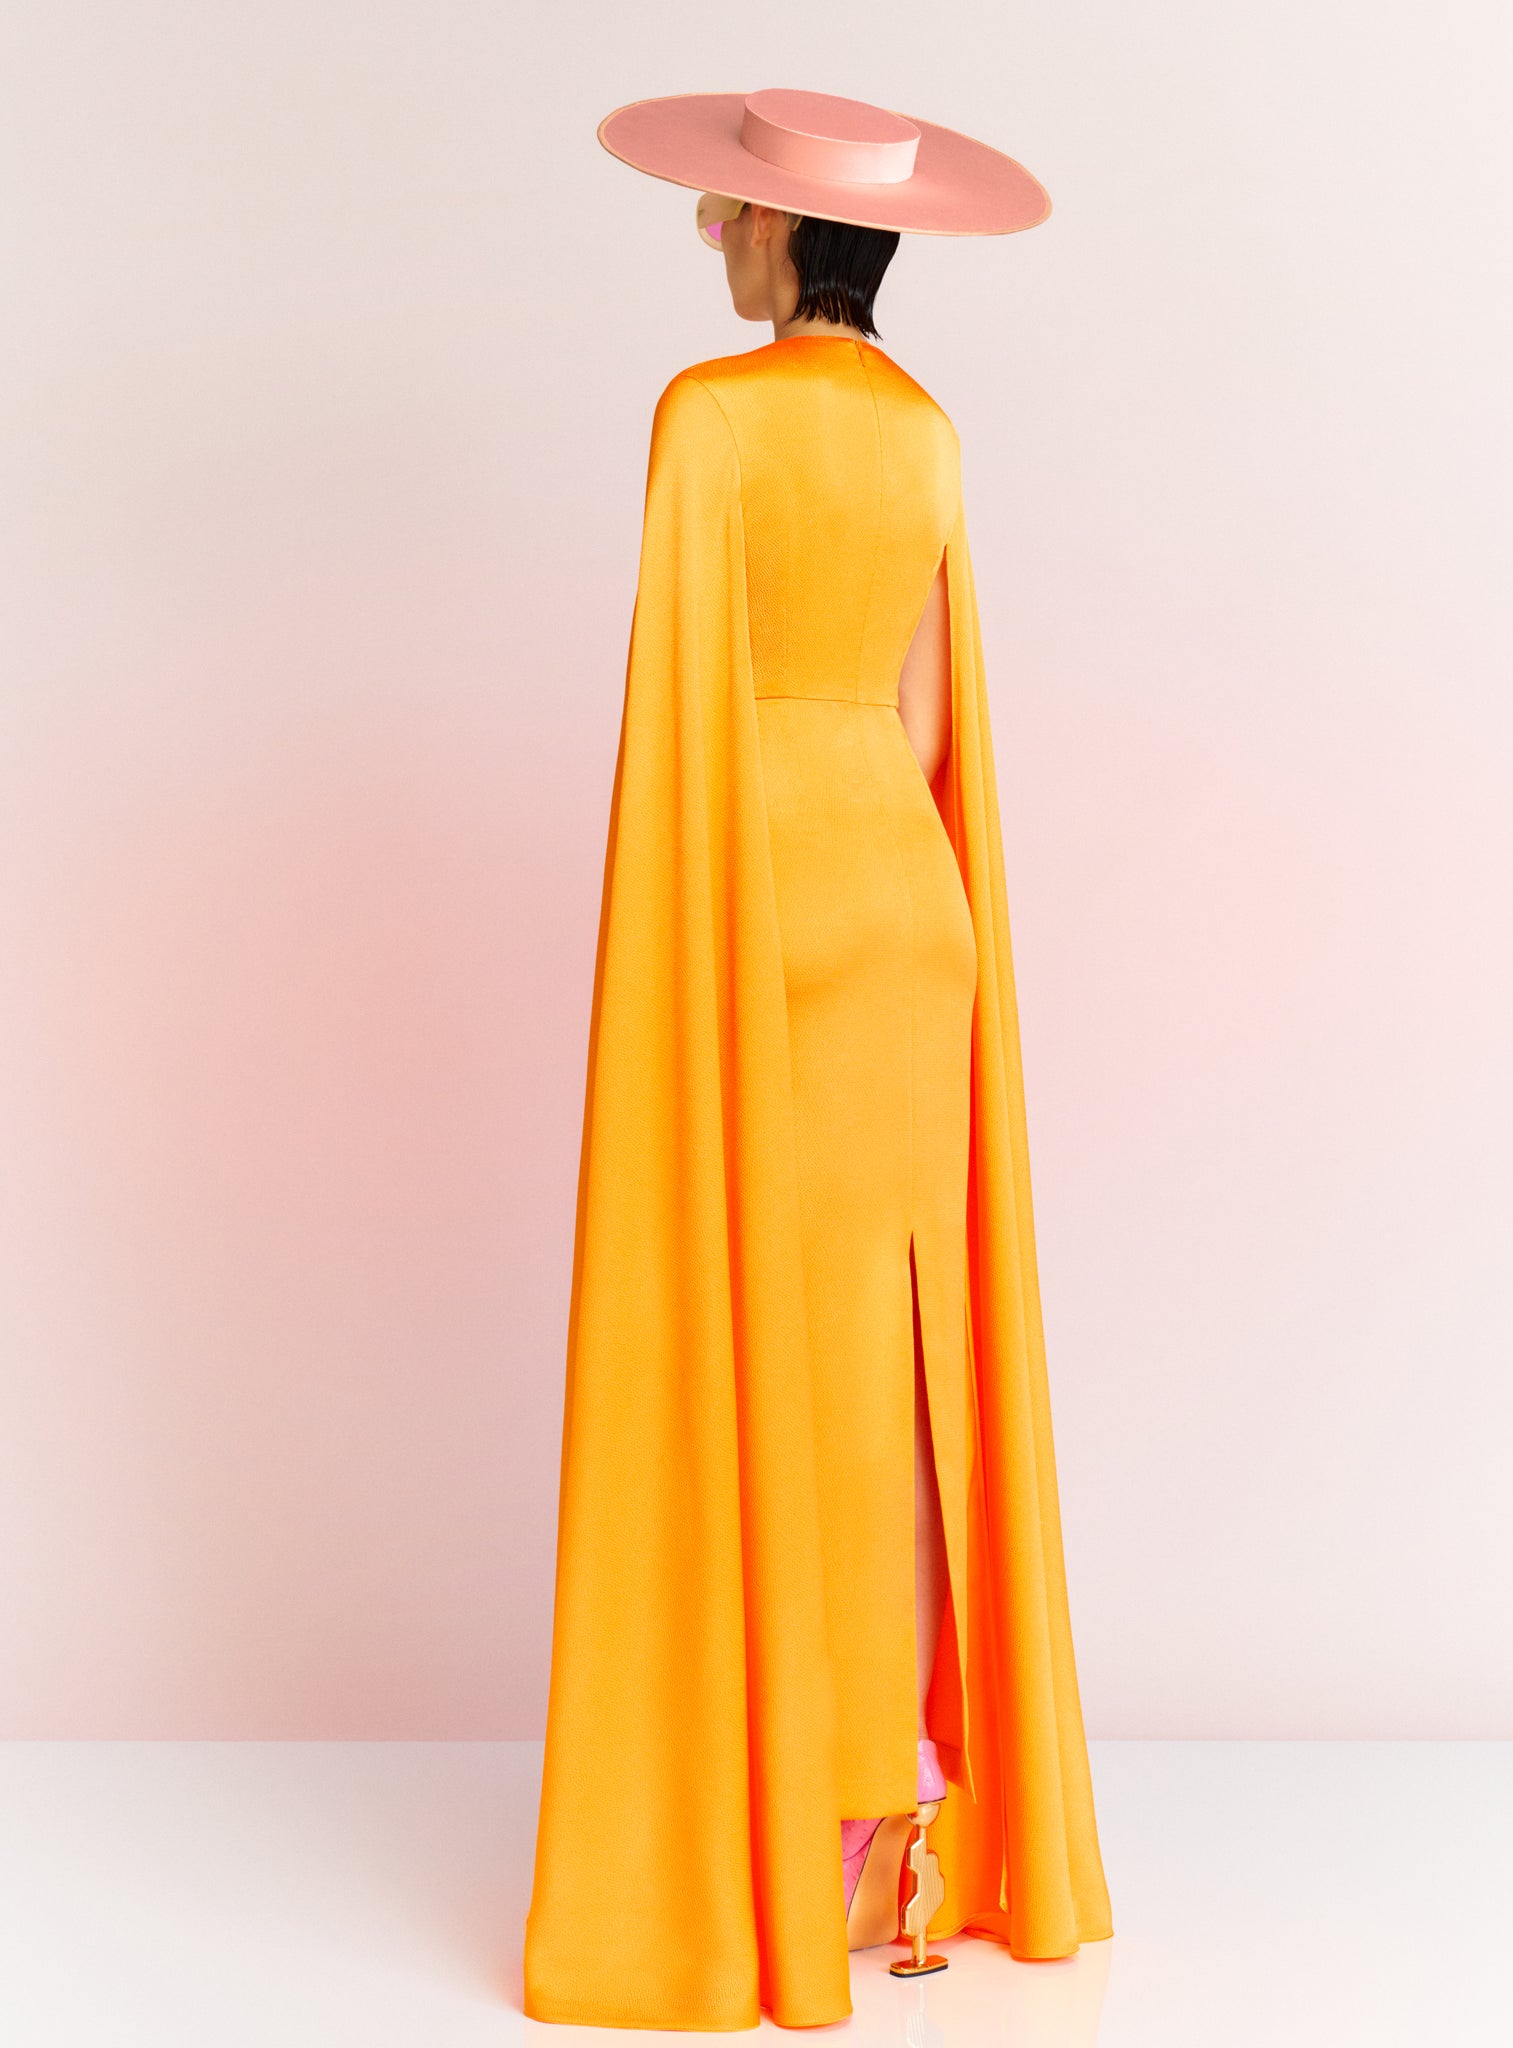 The Elya Maxi Dress in Orange